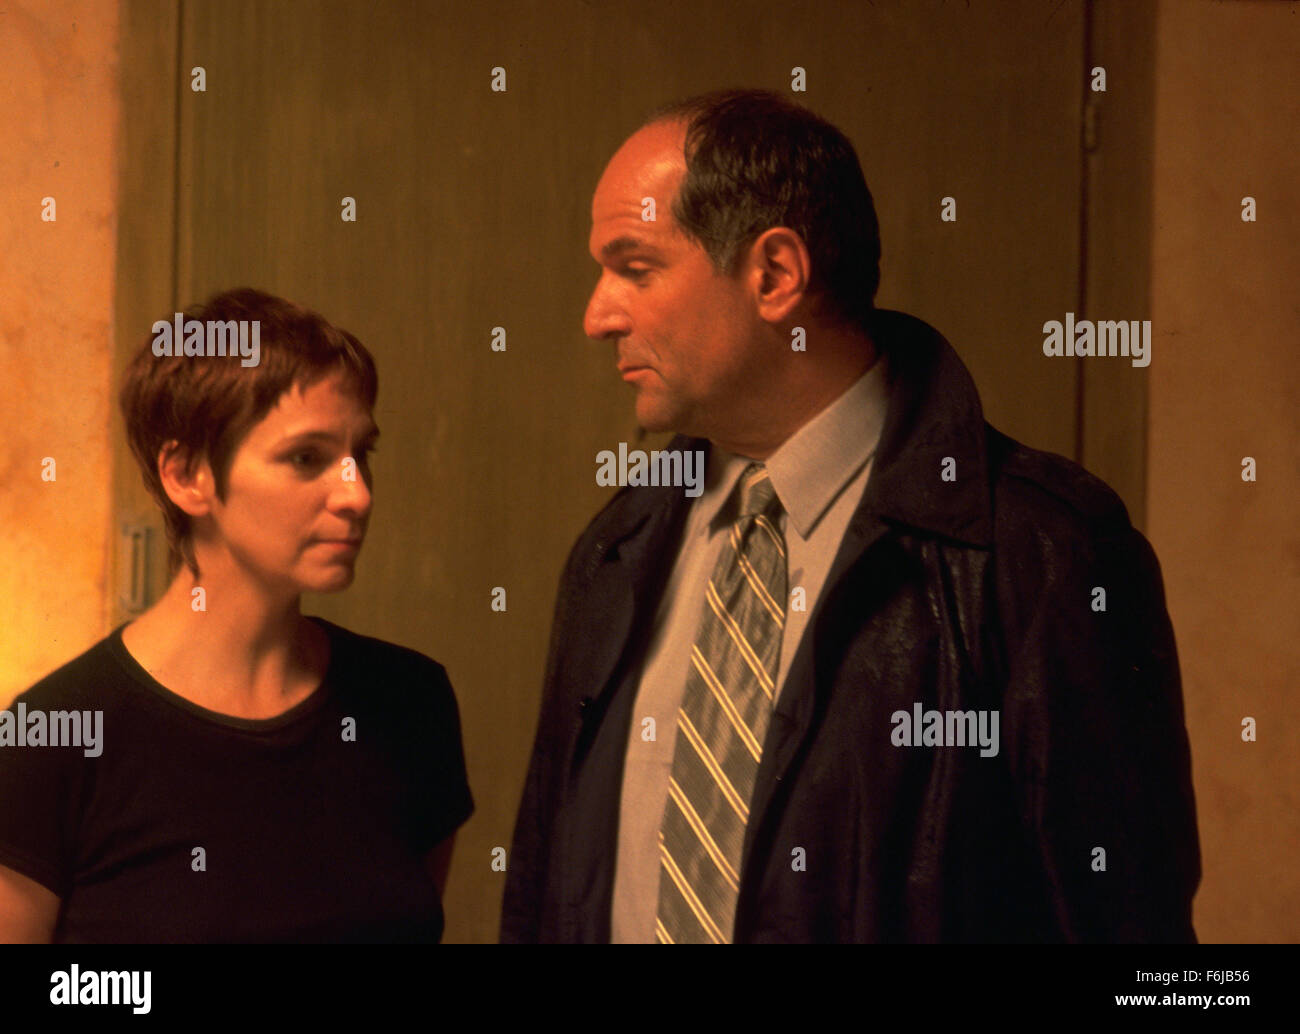 May 14, 2003; Bucharest, Romania; Actors AMANDA PLUMMER as Simone and JOHN KAPELOS as Det. Gary Dumars in 'Mimic: Sentinel'. Directed by J.T. Petty. Stock Photo